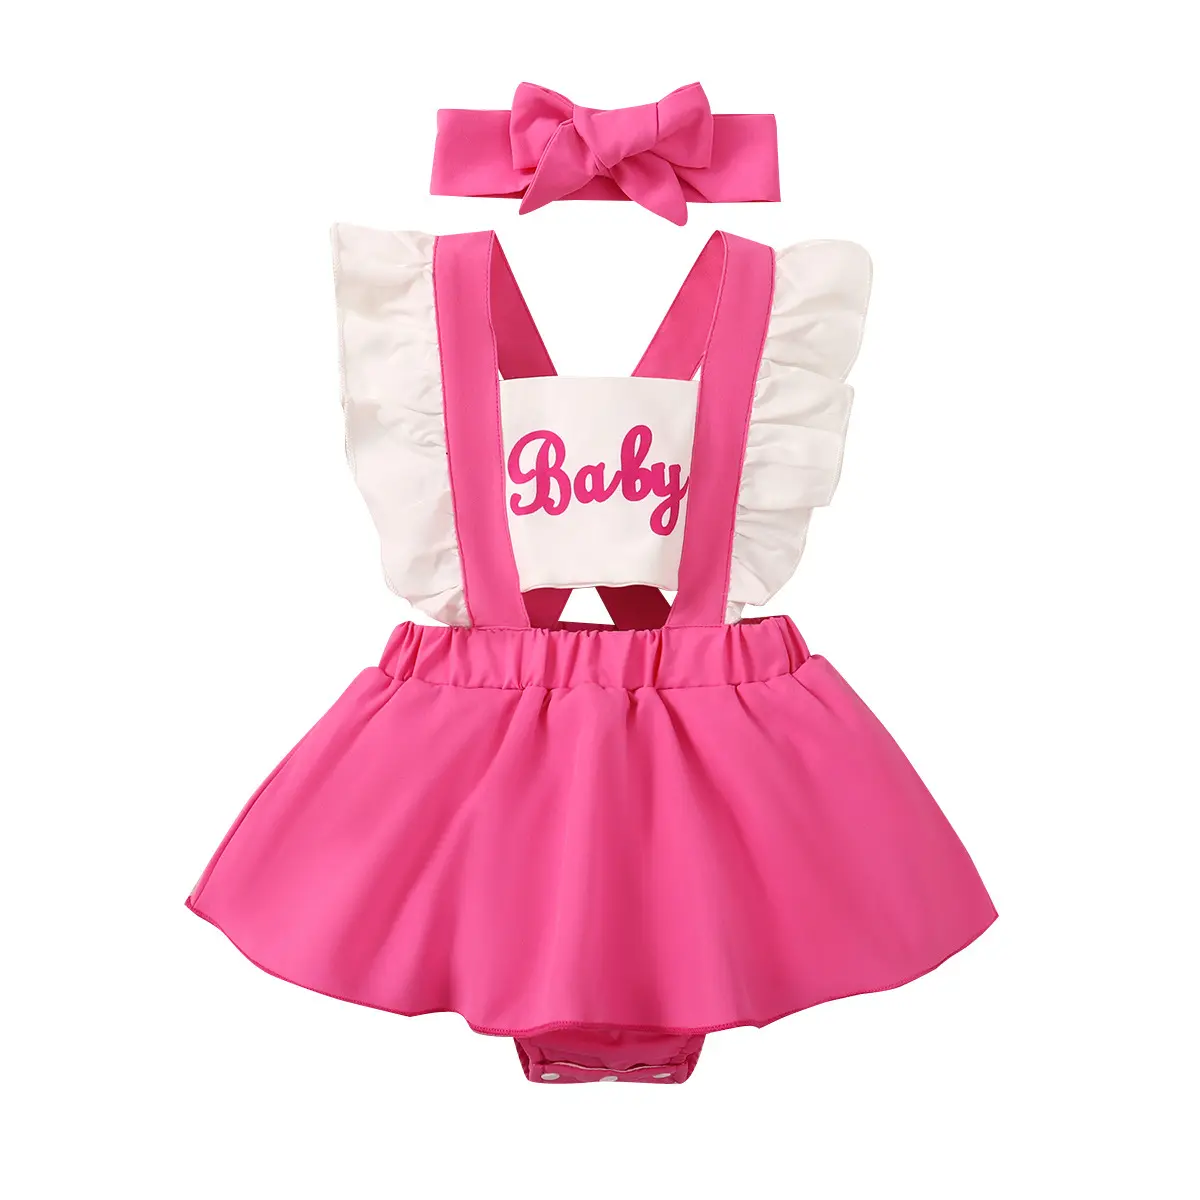 Neuzugang Sommer Baby-Mädchen-Strampler Mädchen-Babybekleidung rosa Baby-Mädchen-Stramplerkleid